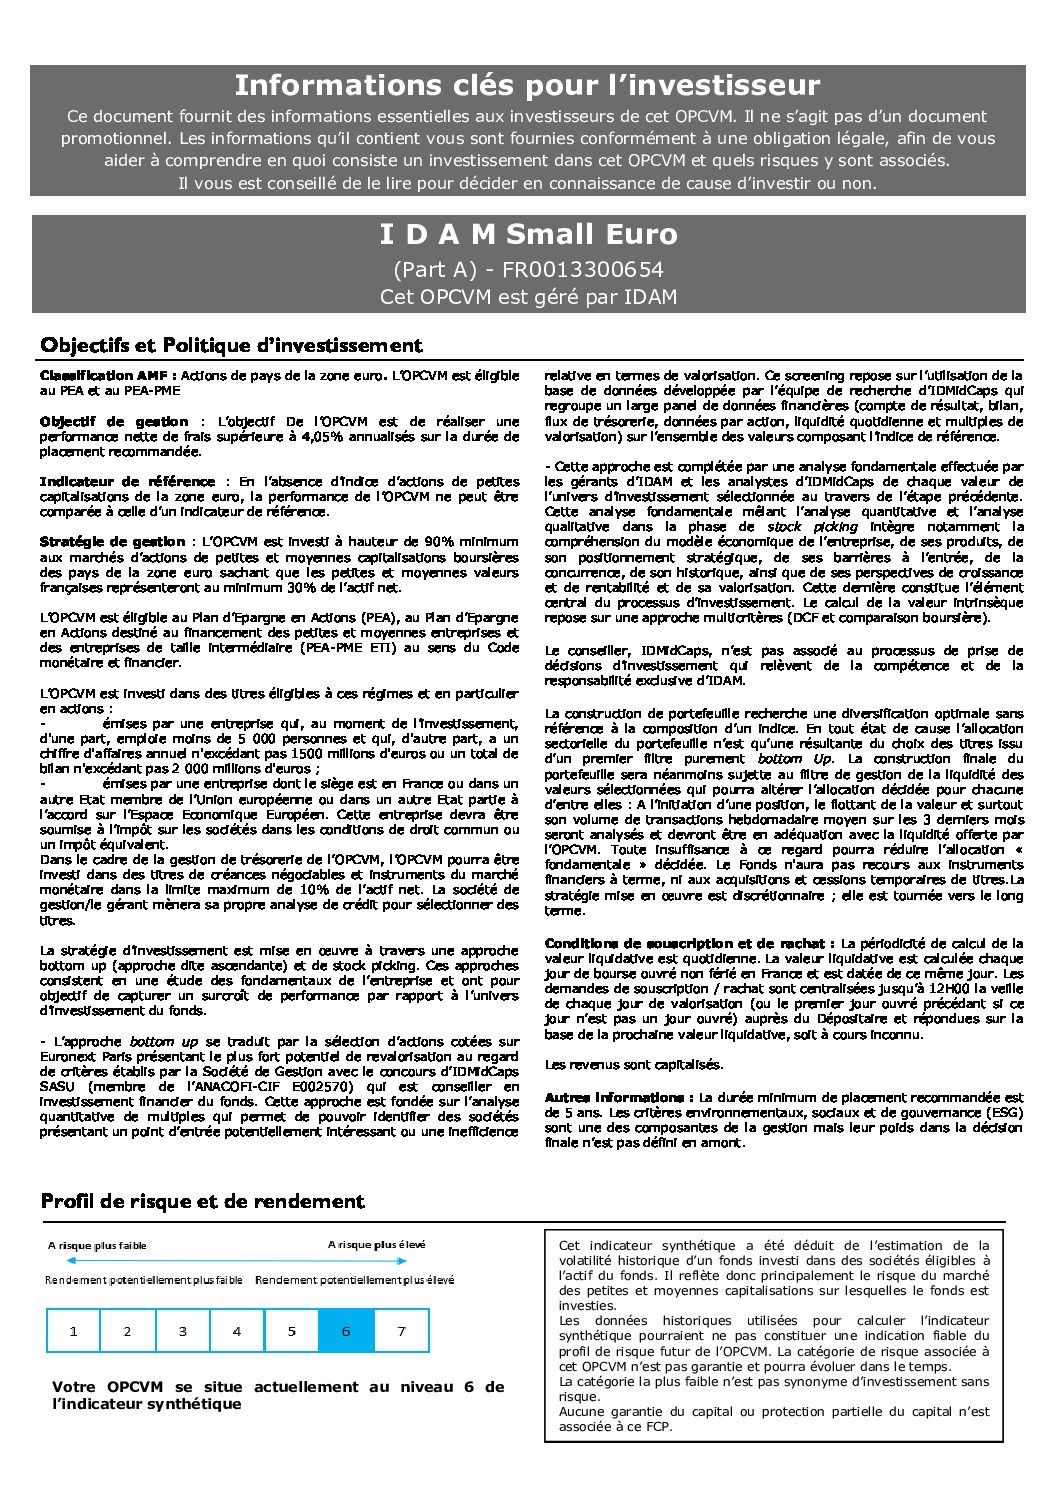 DICI-Part-A-IDAM-SMALL-EURO-3-pdf